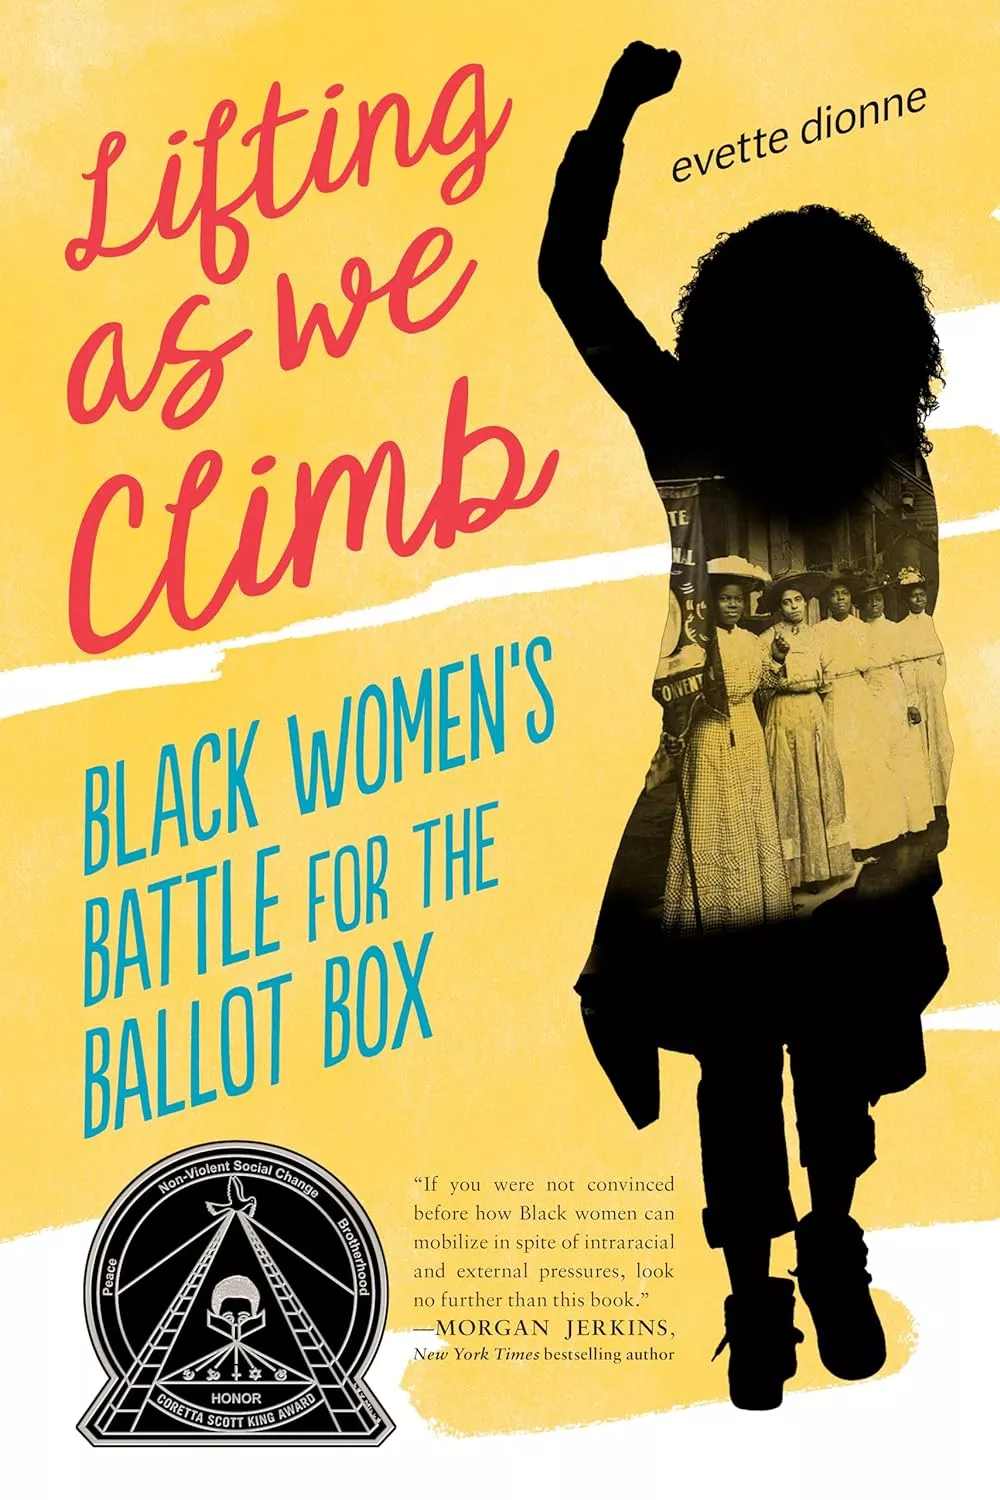 Lifting as we climb : black women's battle for the ballot box